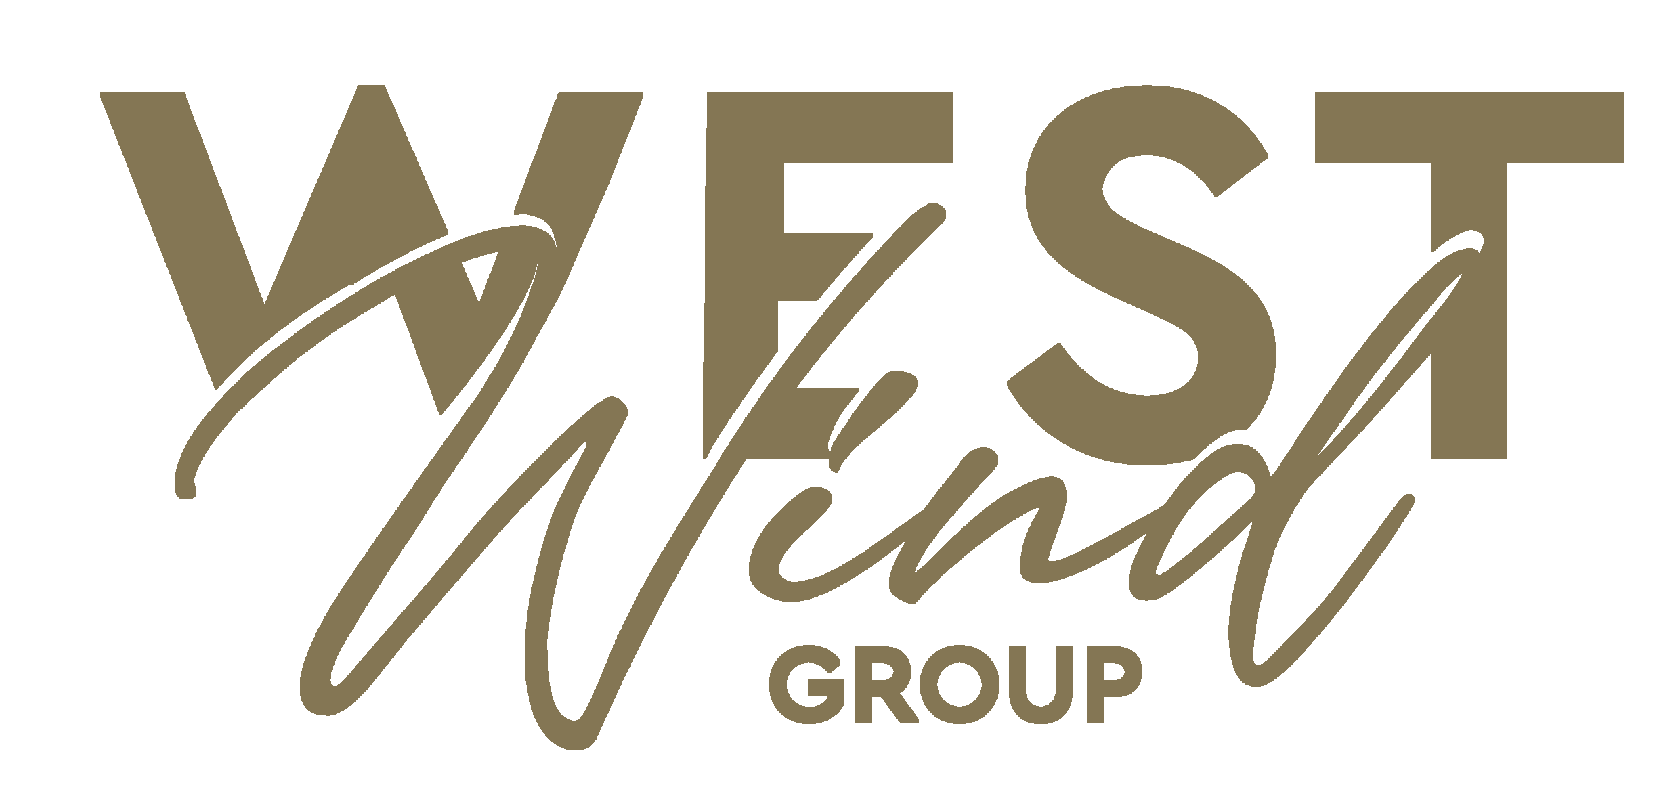 W company. West Wind Group Москва. Vetrov Group логотип. West Wind Group логотип. Савацкий груп логотип.